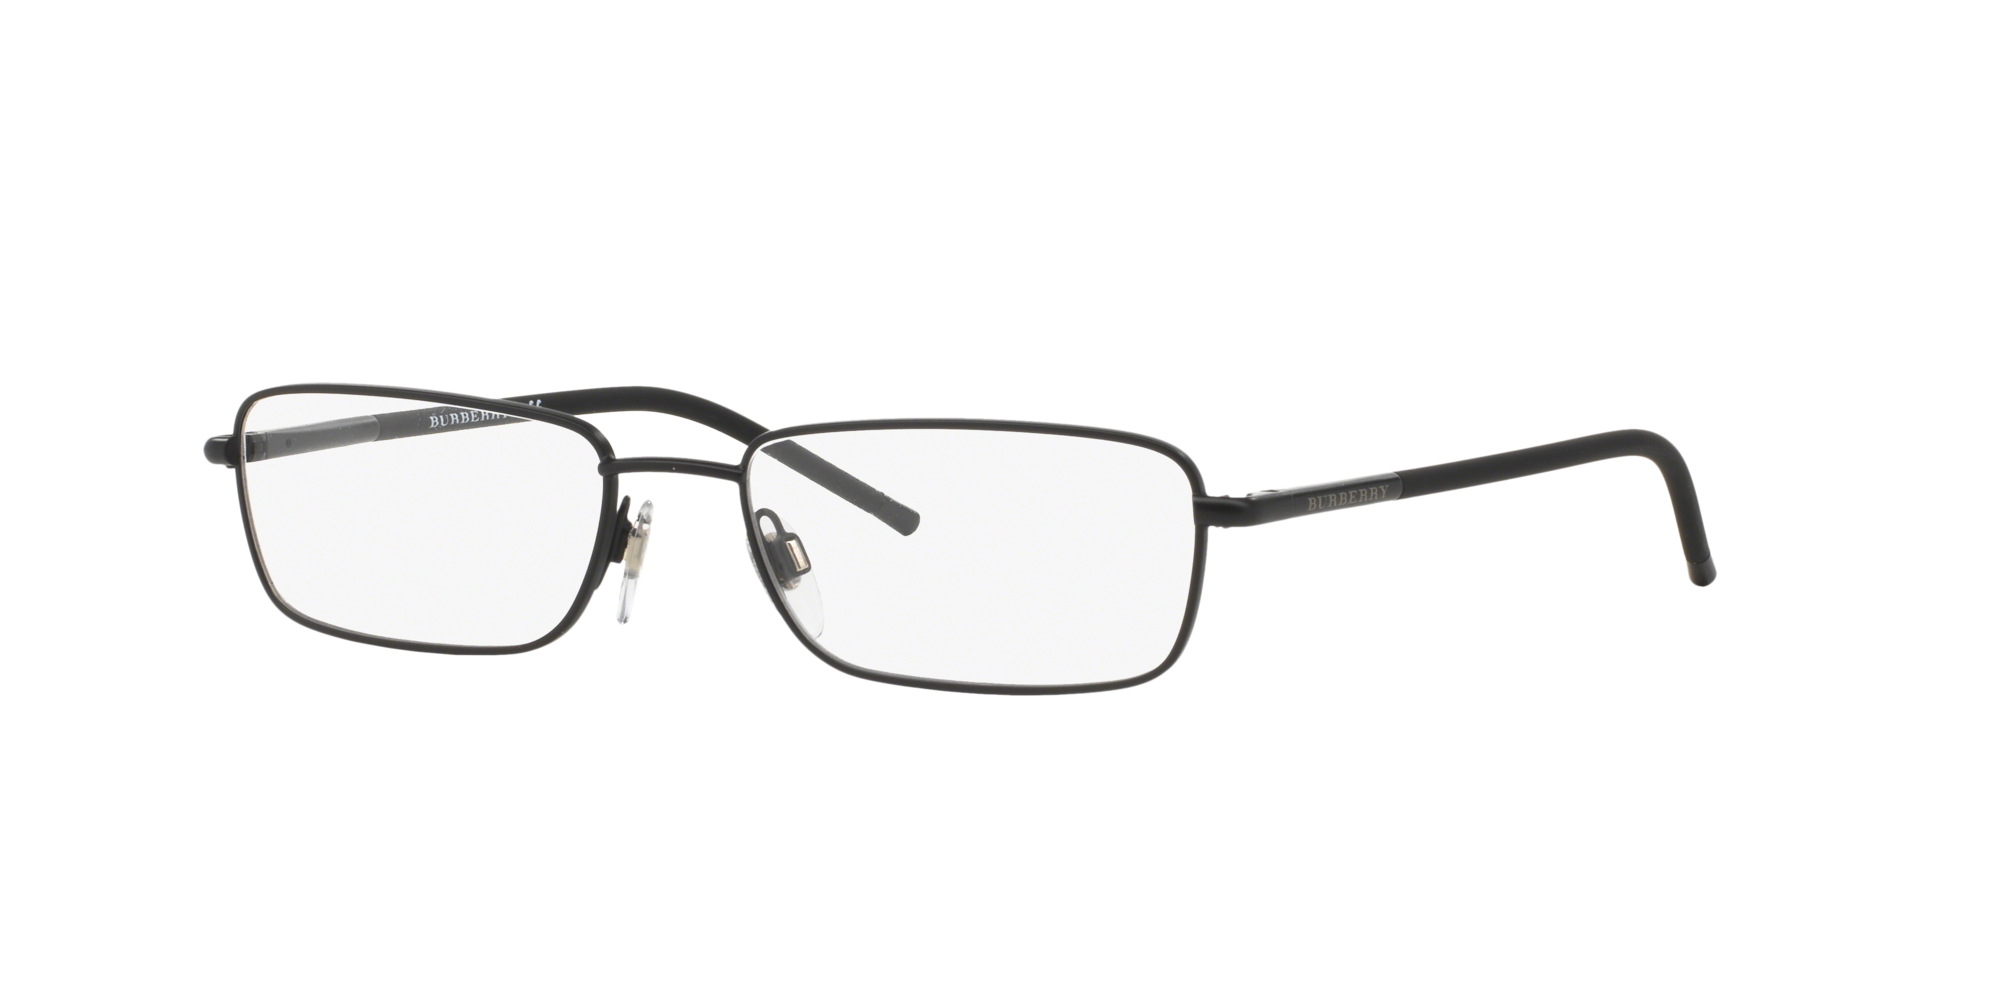 burberry men's eyeglass frames